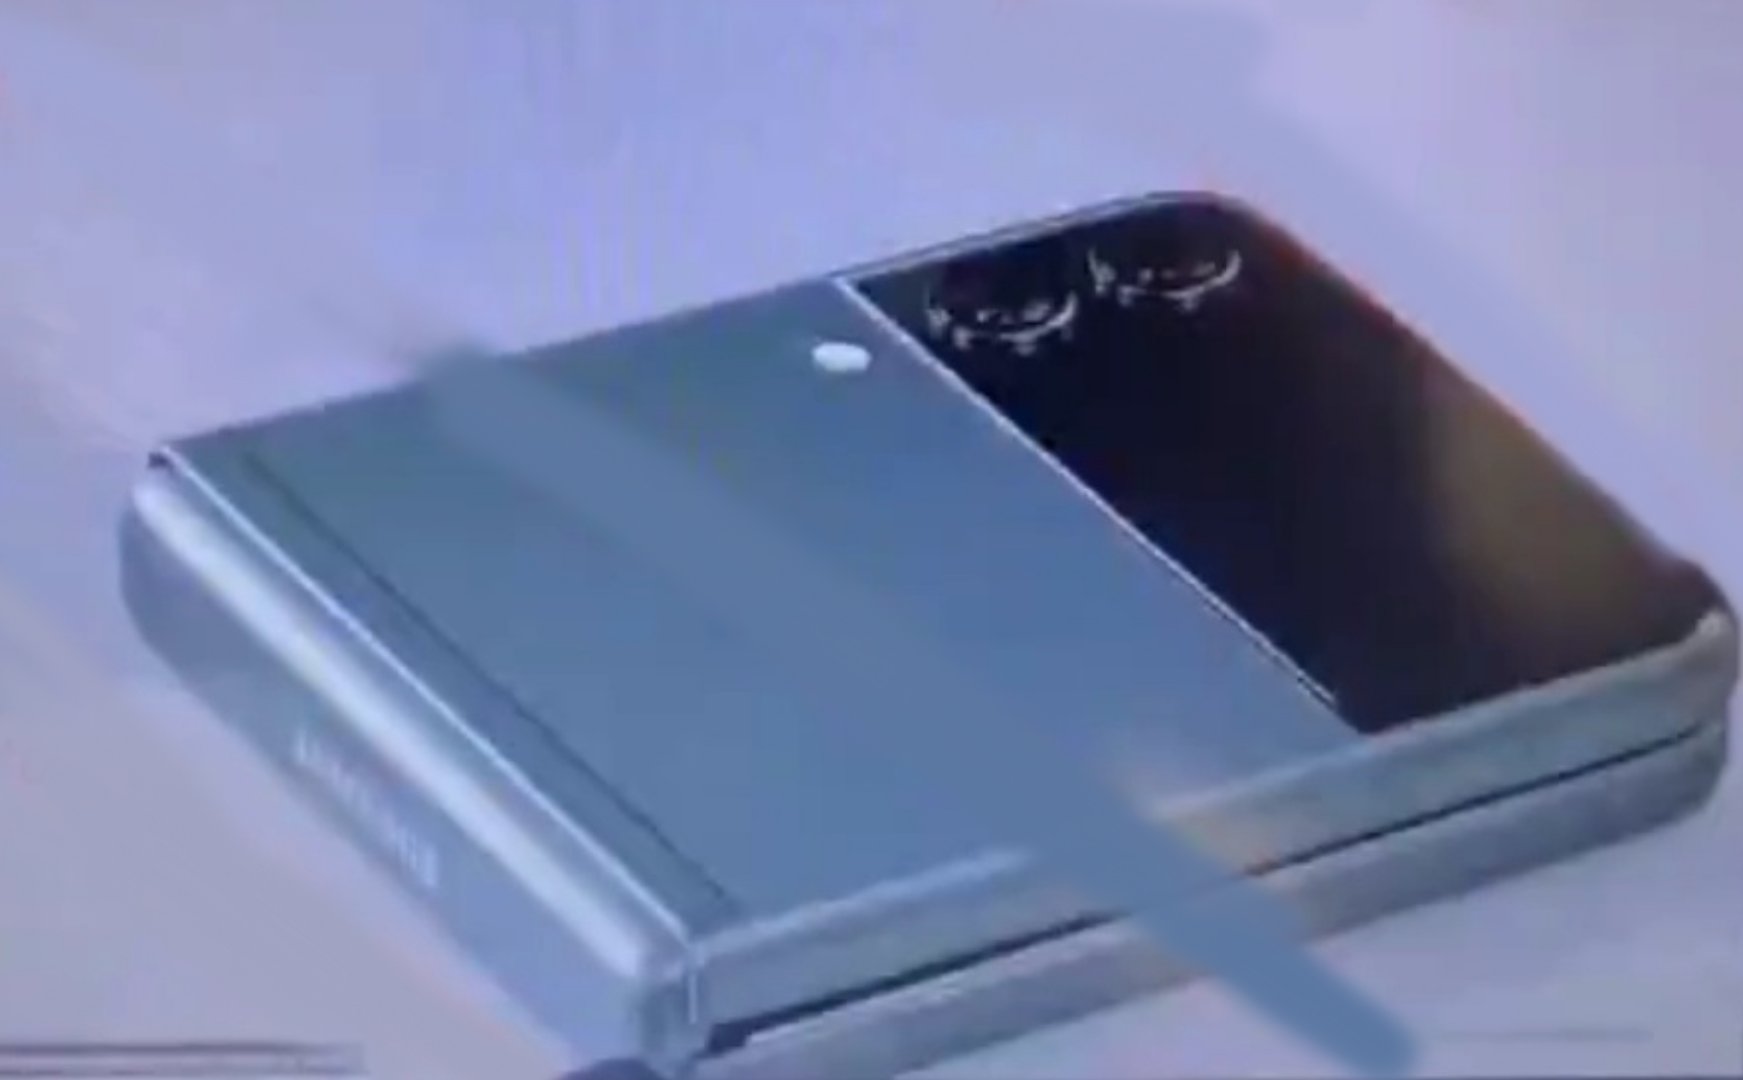 Samsung Galaxy Z Fold3 and Z Flip3 Leak Reveals Design Renders, Key Details in Promo Materials